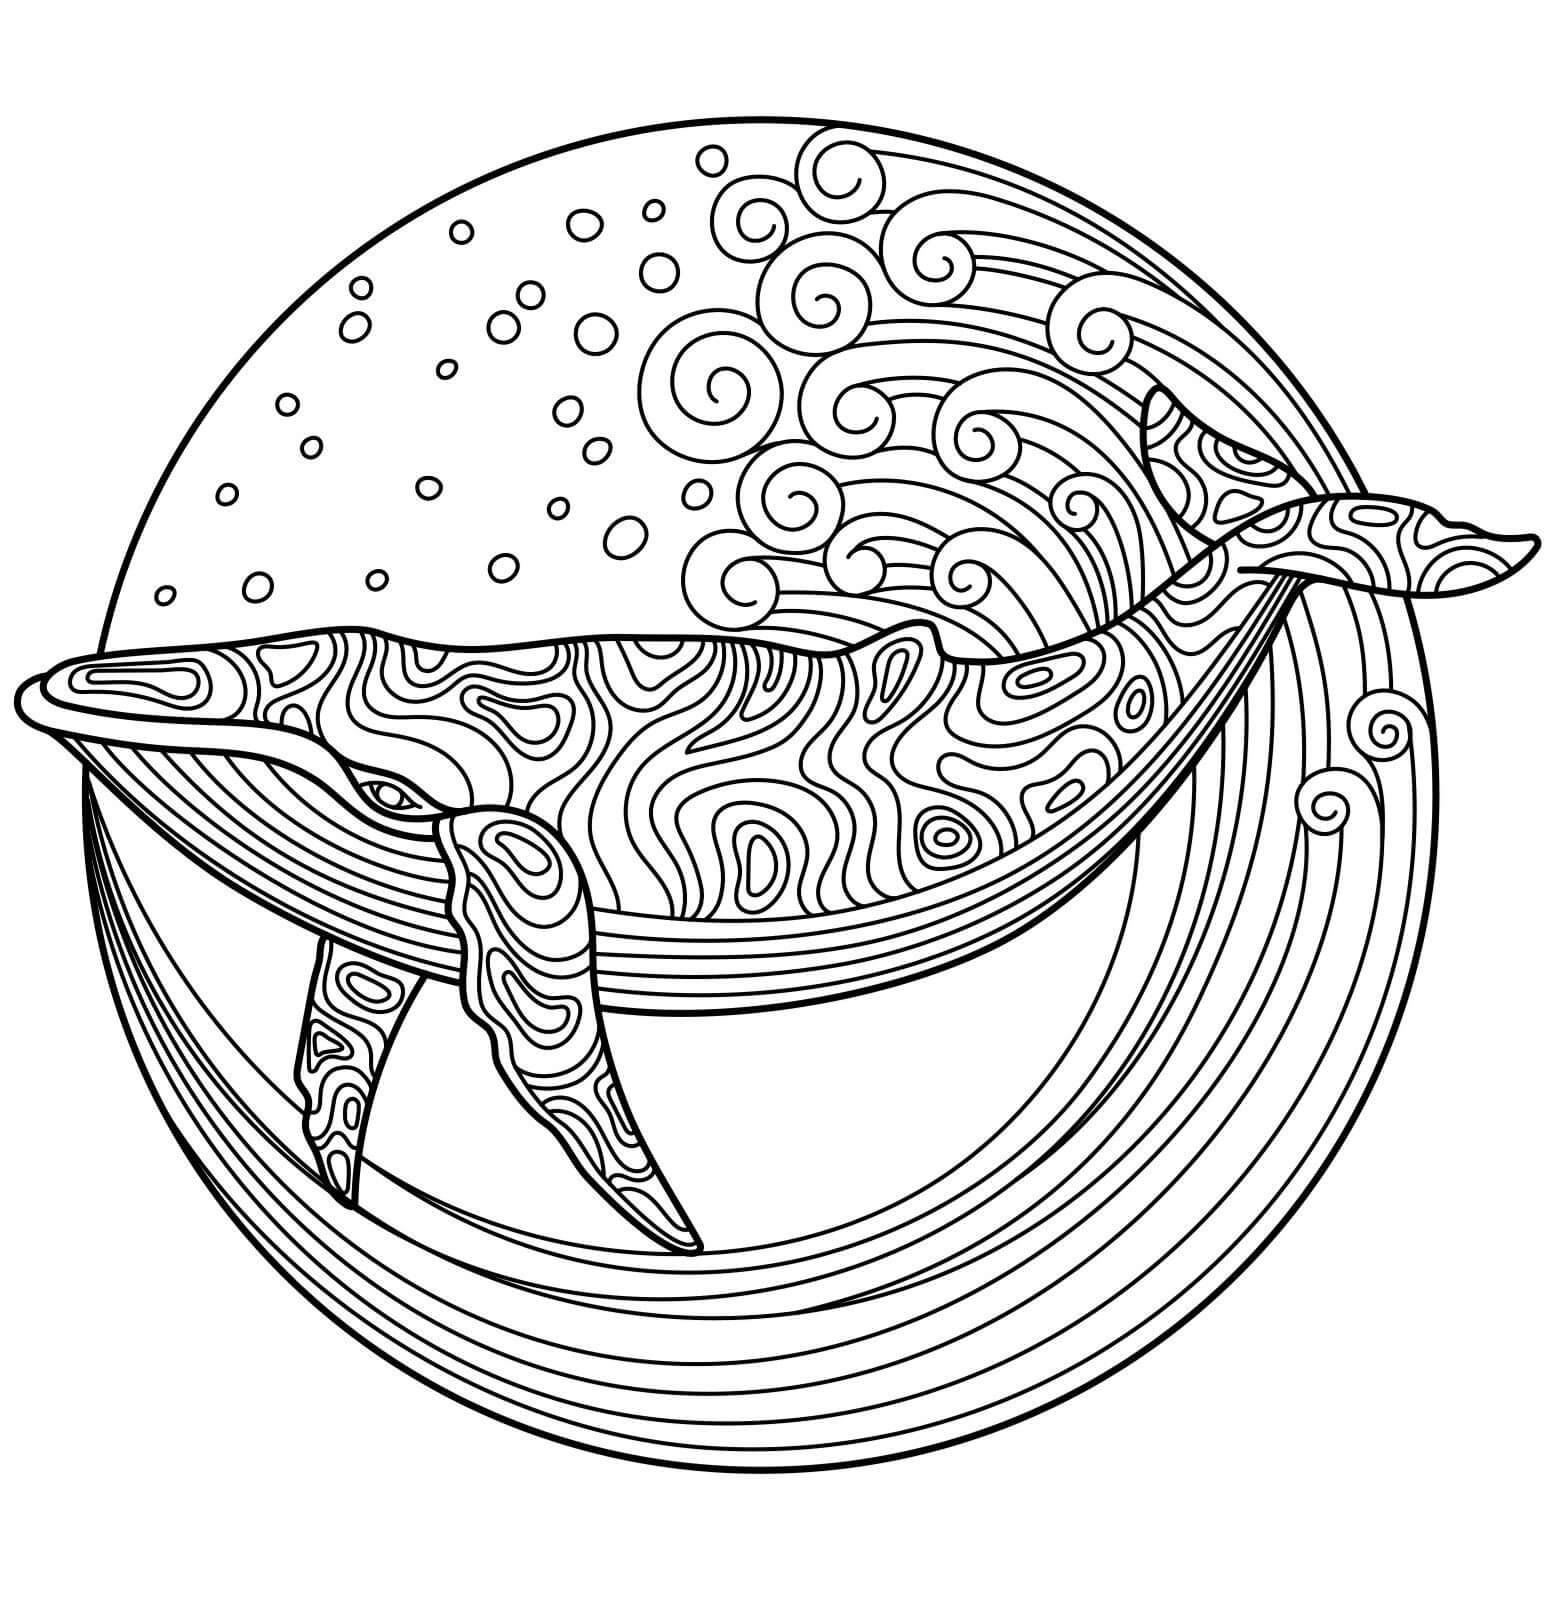 Mandala Whale Coloring Page - Sheet 1 Mandalas